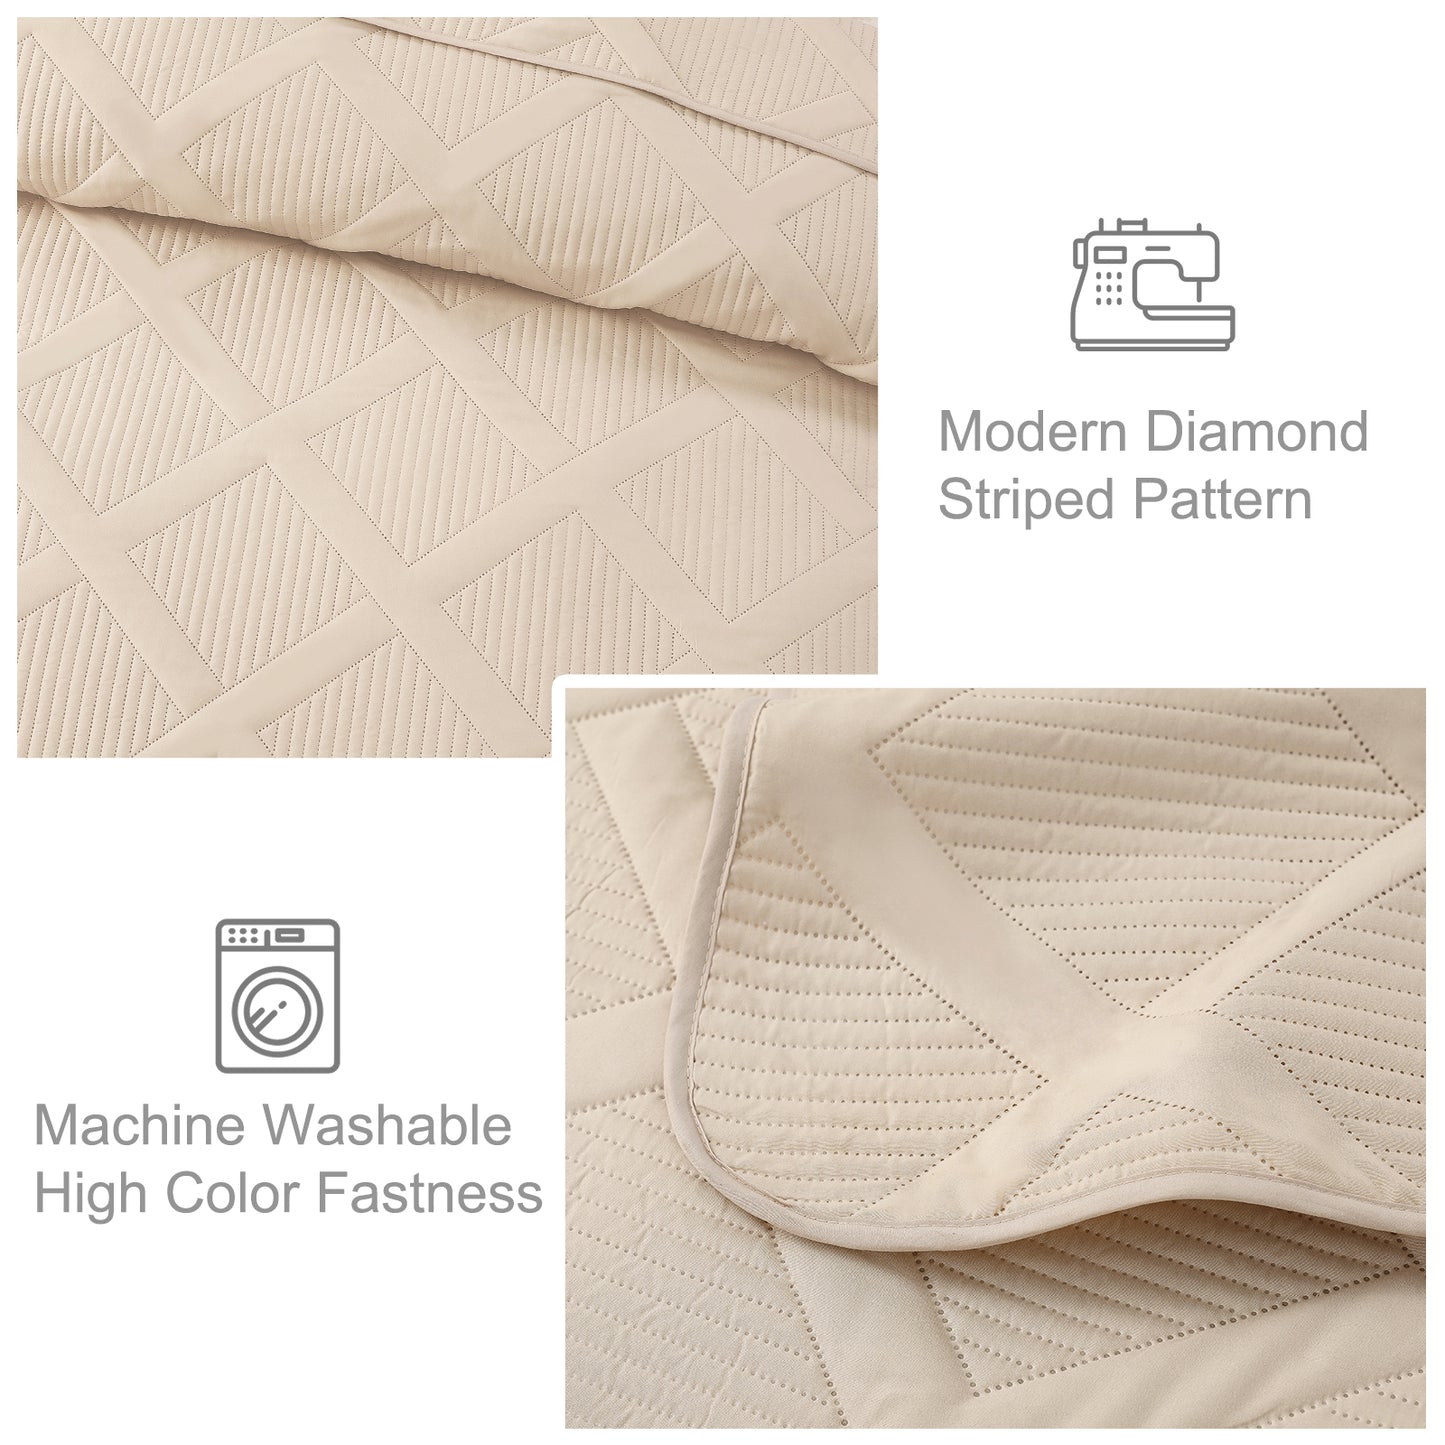 Exclusivo Mezcla Ultrasonic Twin/ Twin XL Quilt Set, Lightweight Bedspreads Modern Striped Coverlet with 1 Pillow Sham, Brich Beige